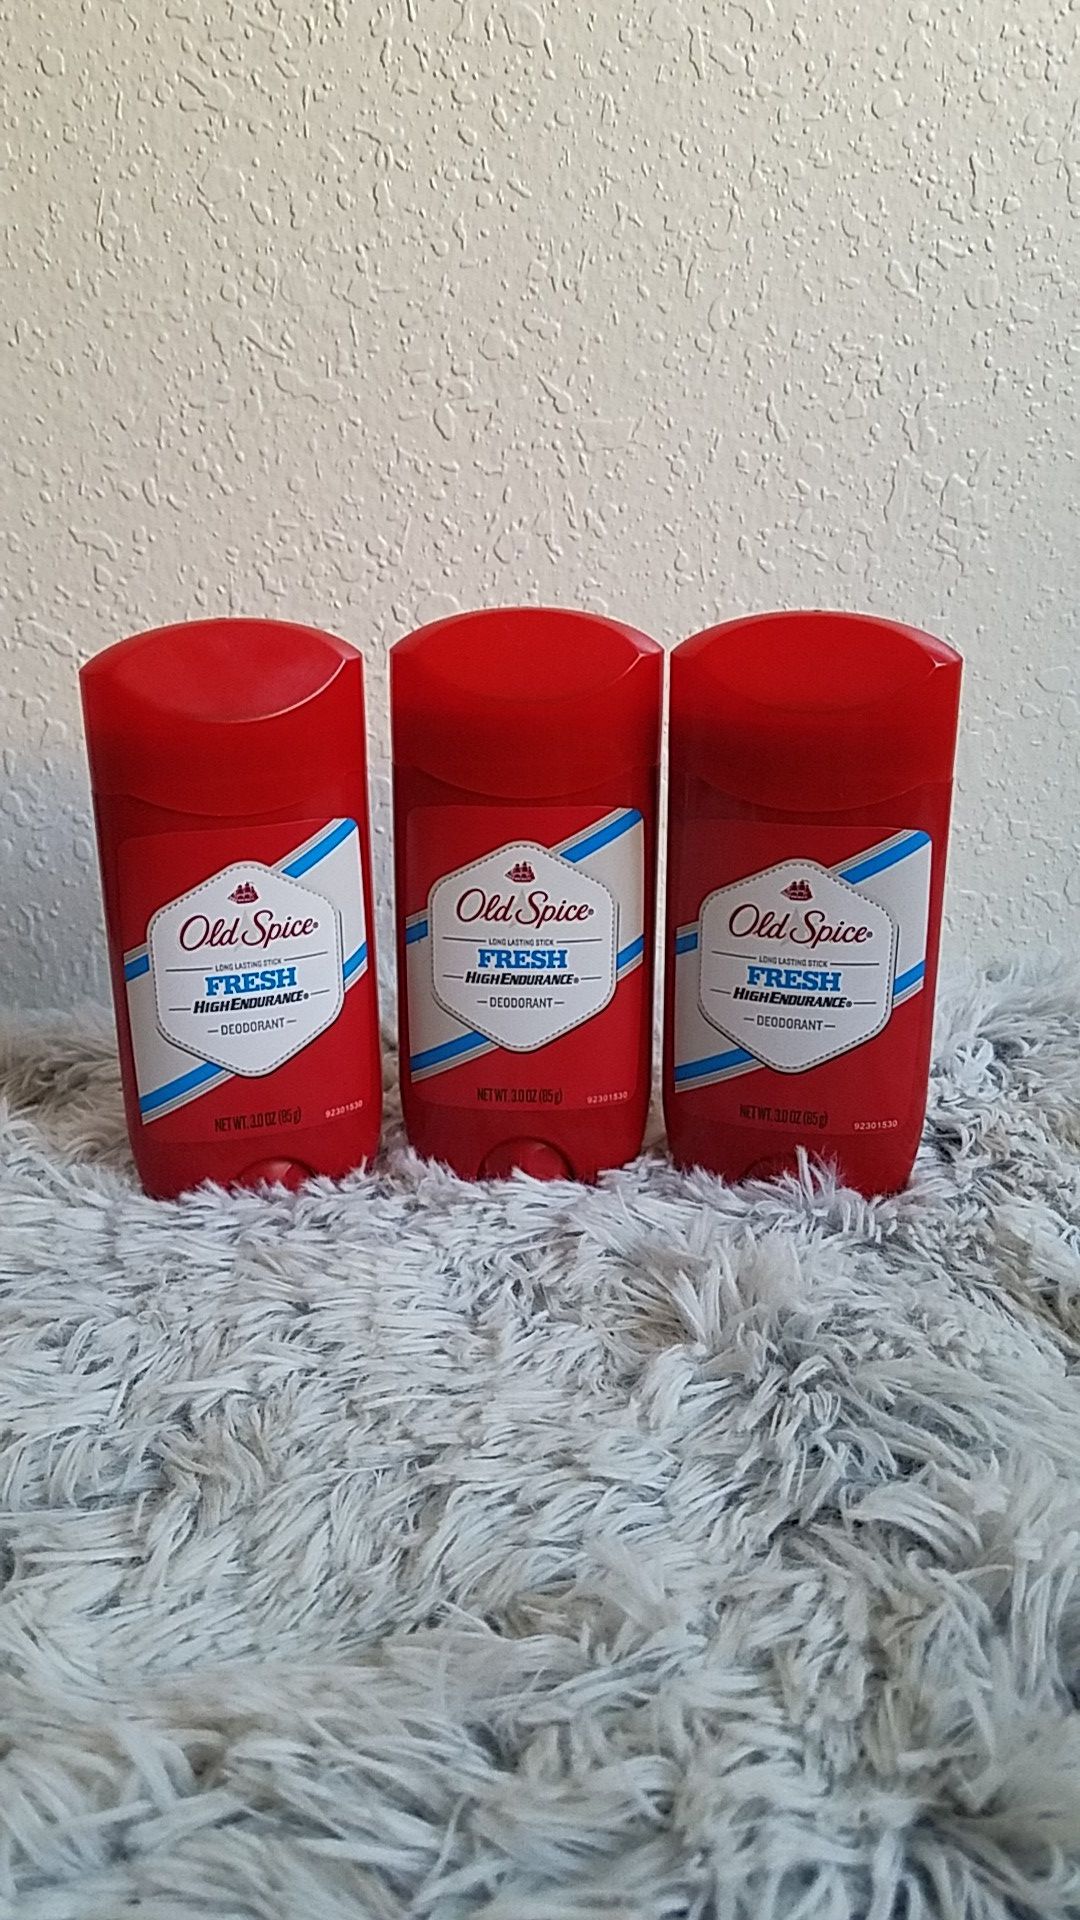 3 Old Spice Mens deodorant $5